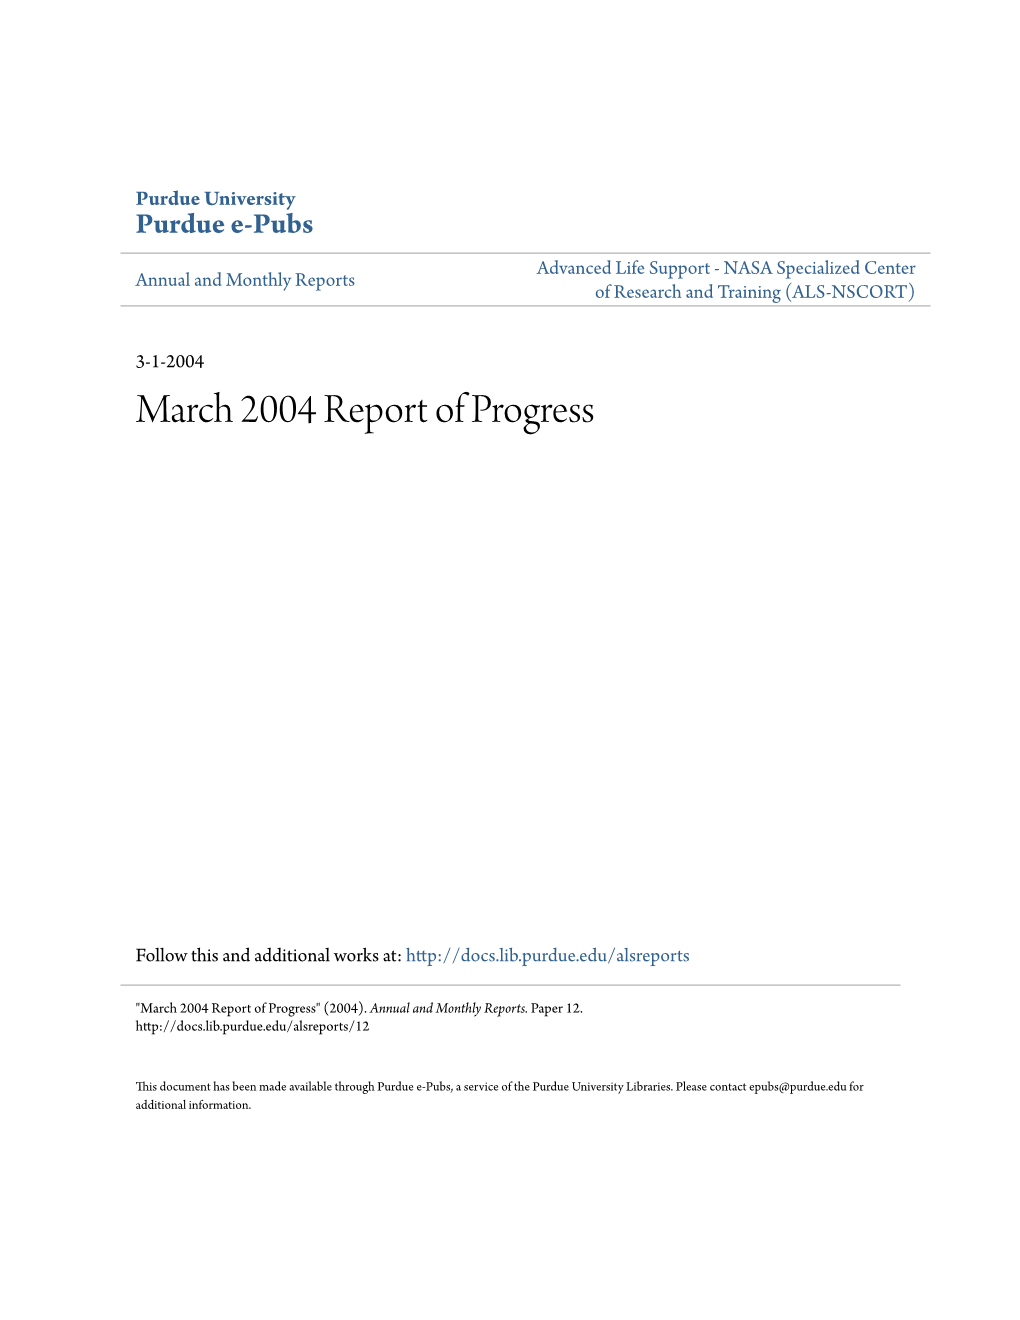 March 2004 Report of Progress